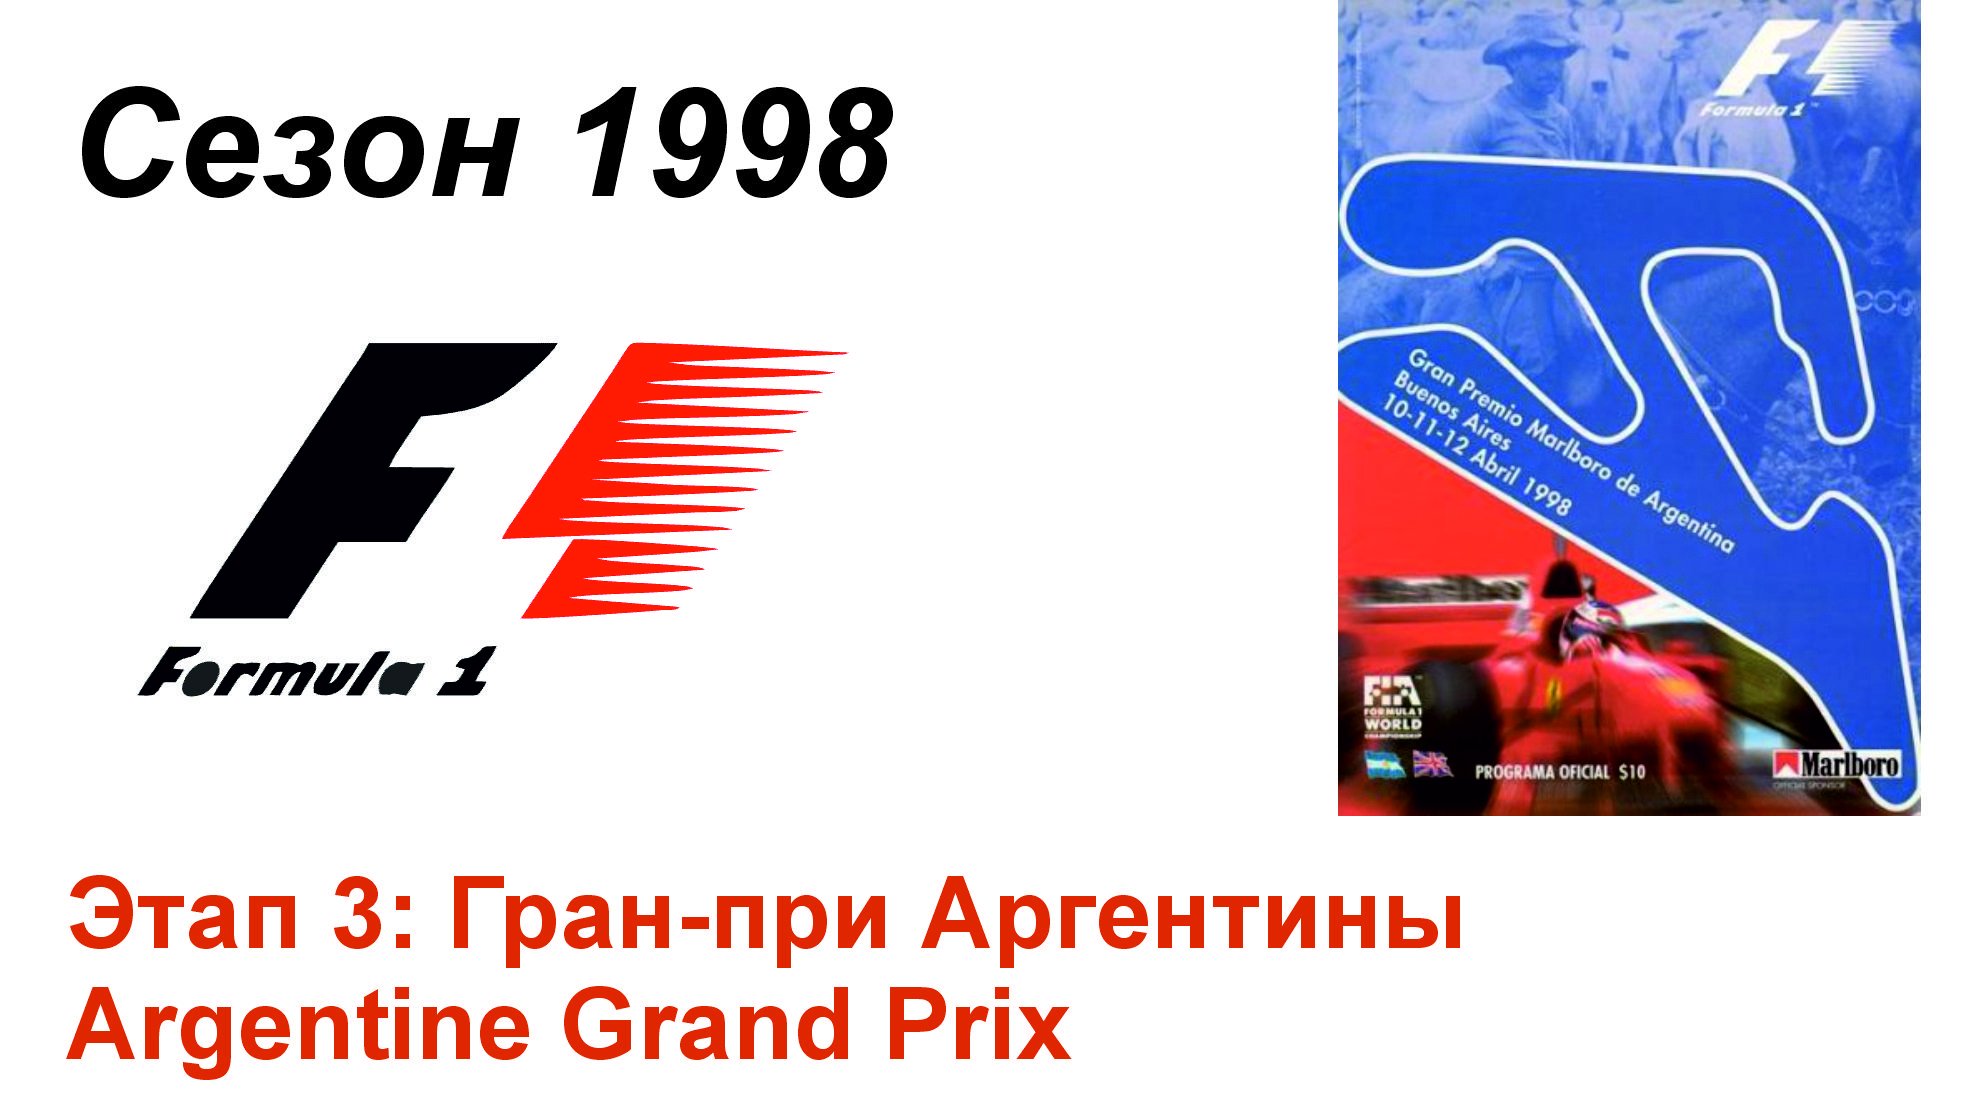 Формула-1 / Formula-1 (1998). Этап 3: Гран-при Аргентины